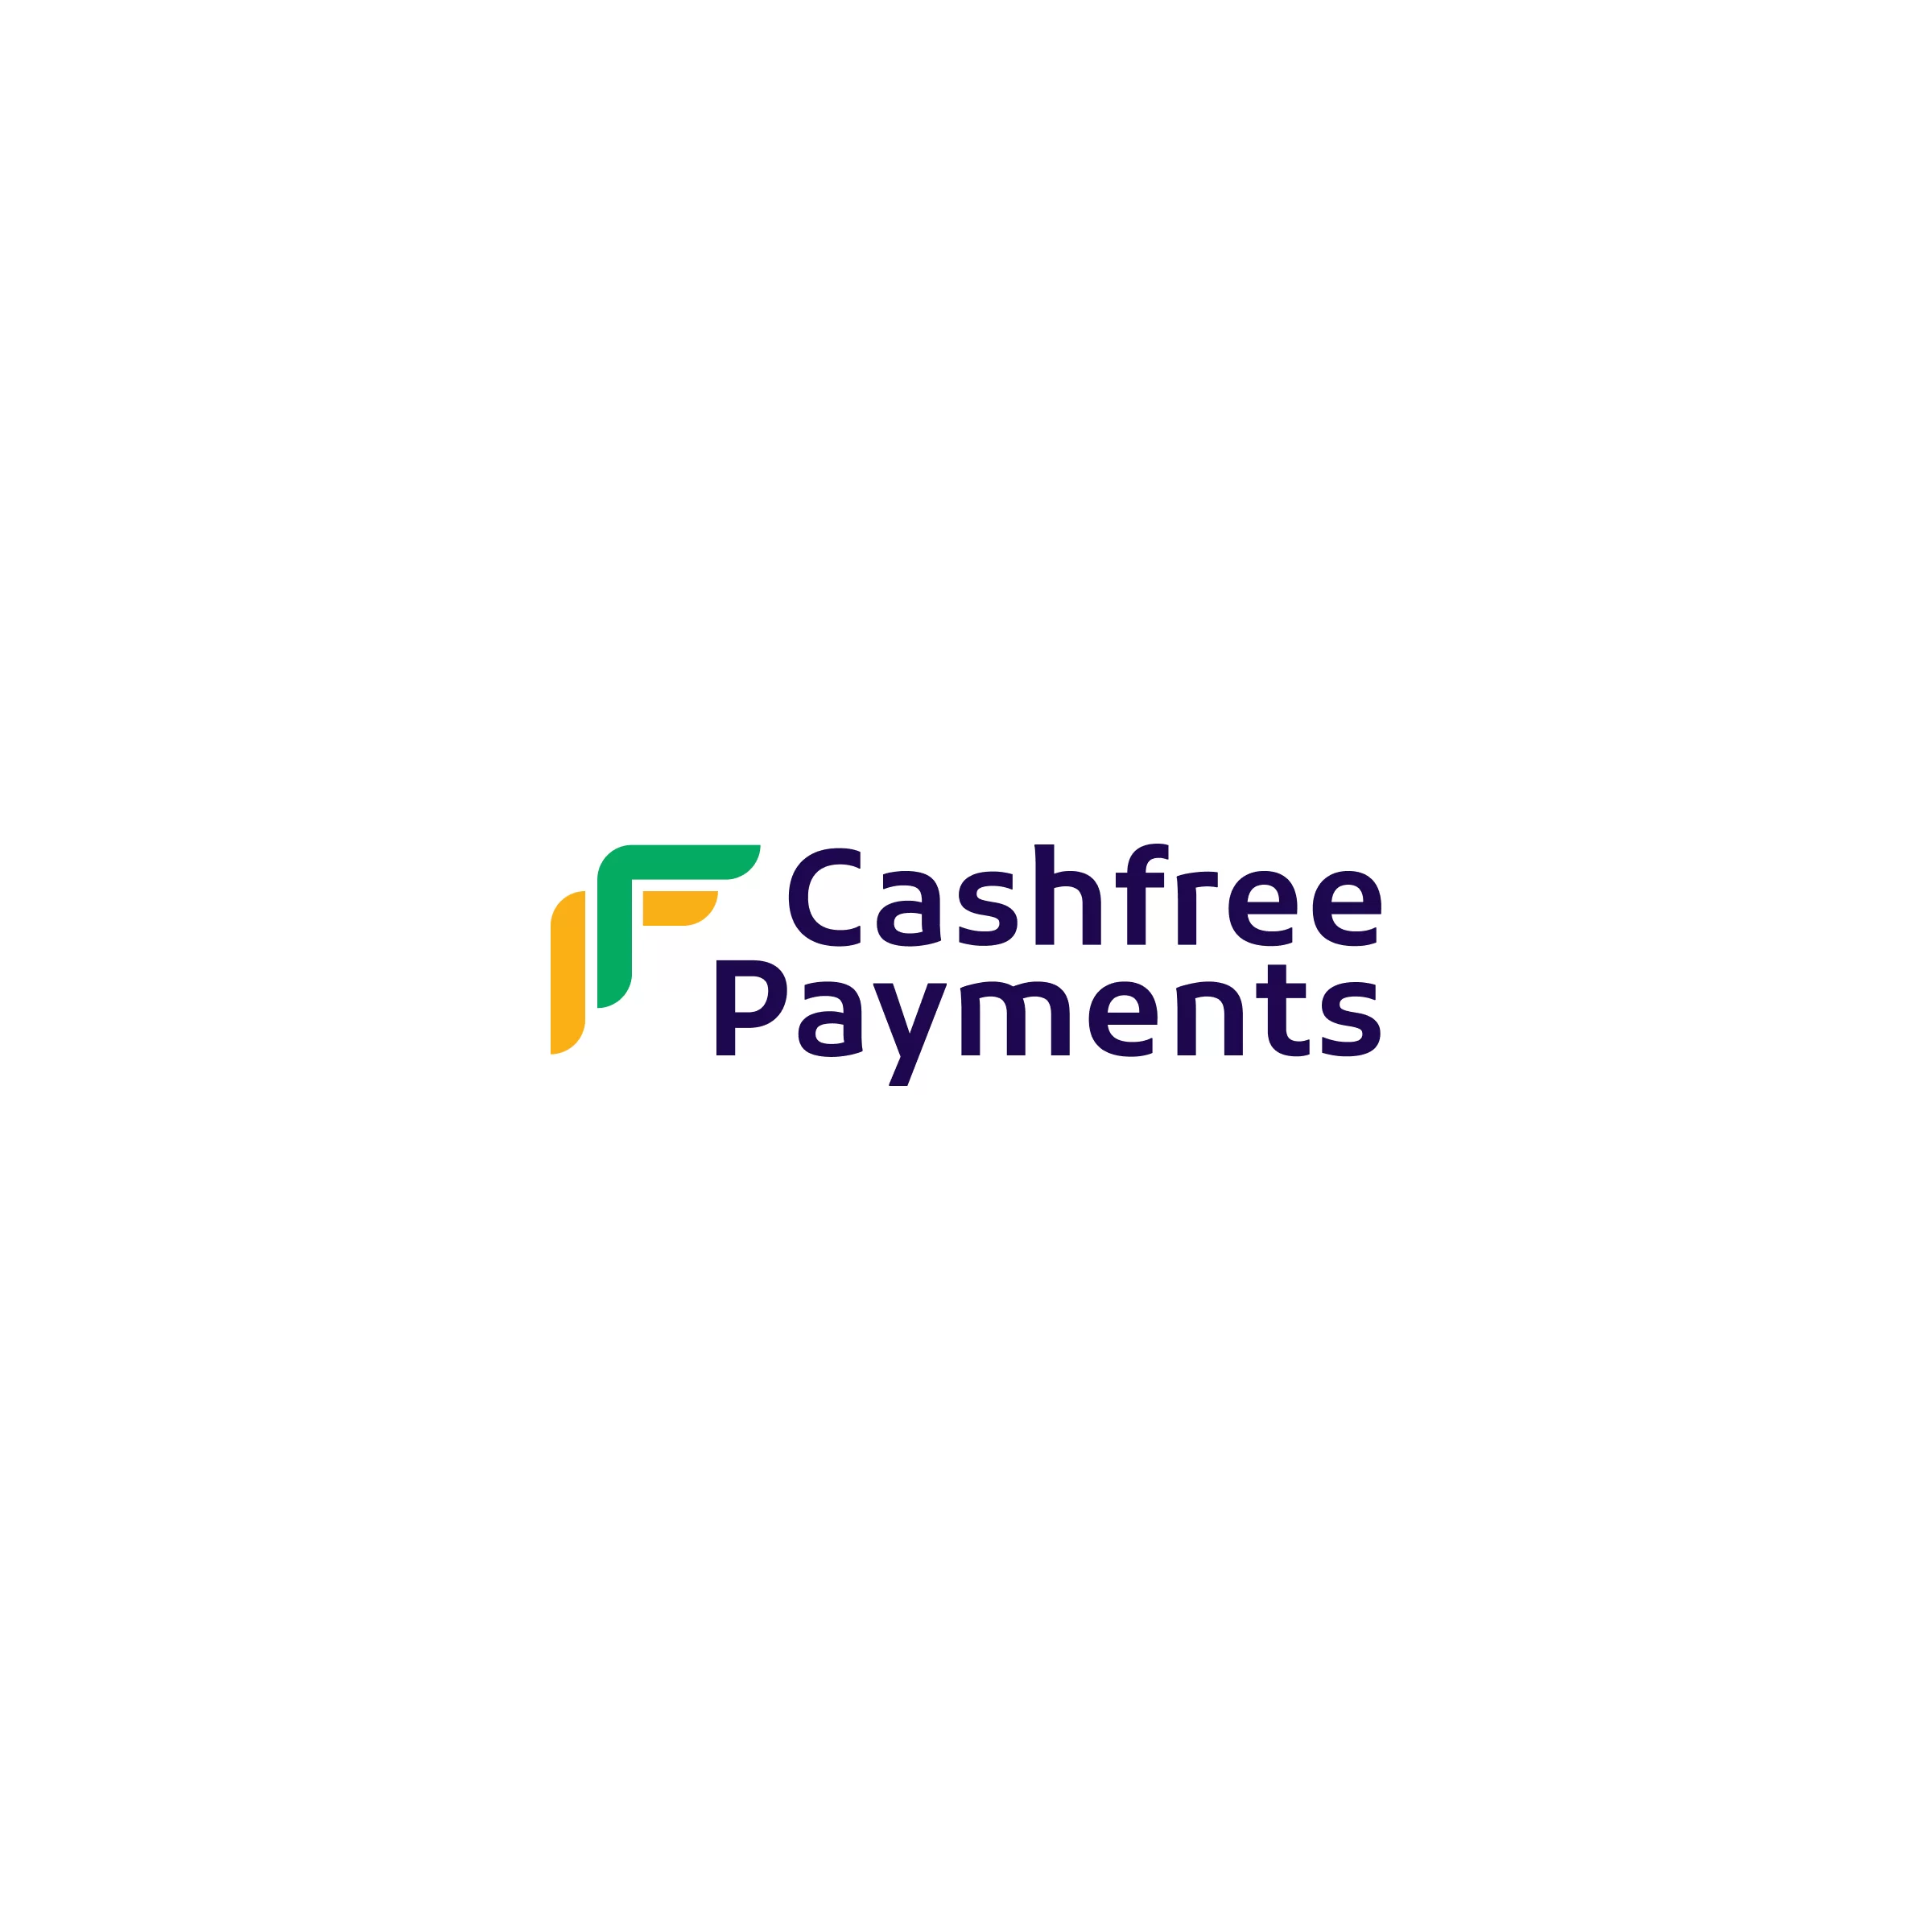 Cashfree Payments Launches E-Commerce Suite to D2C Merchants in India